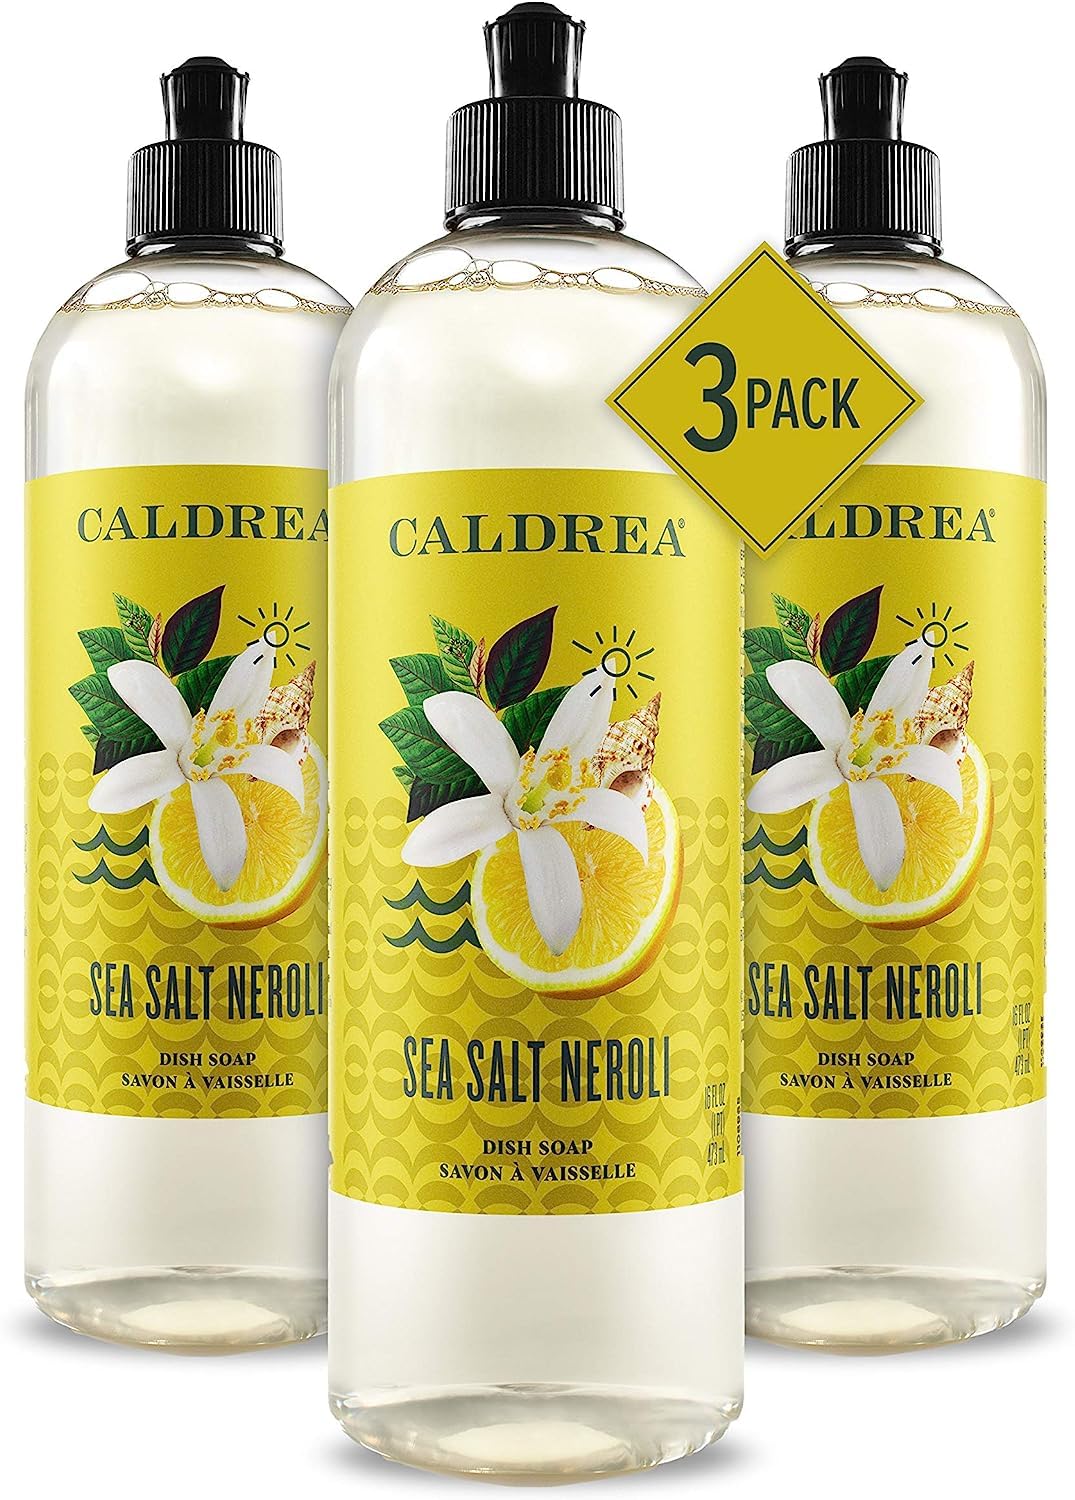 Caldrea Dish Soap, Biodegradable Dishwashing Liquid made with Soap Bark and Aloe Vera, Sea Salt Neroli, 16 oz , 3 Pack